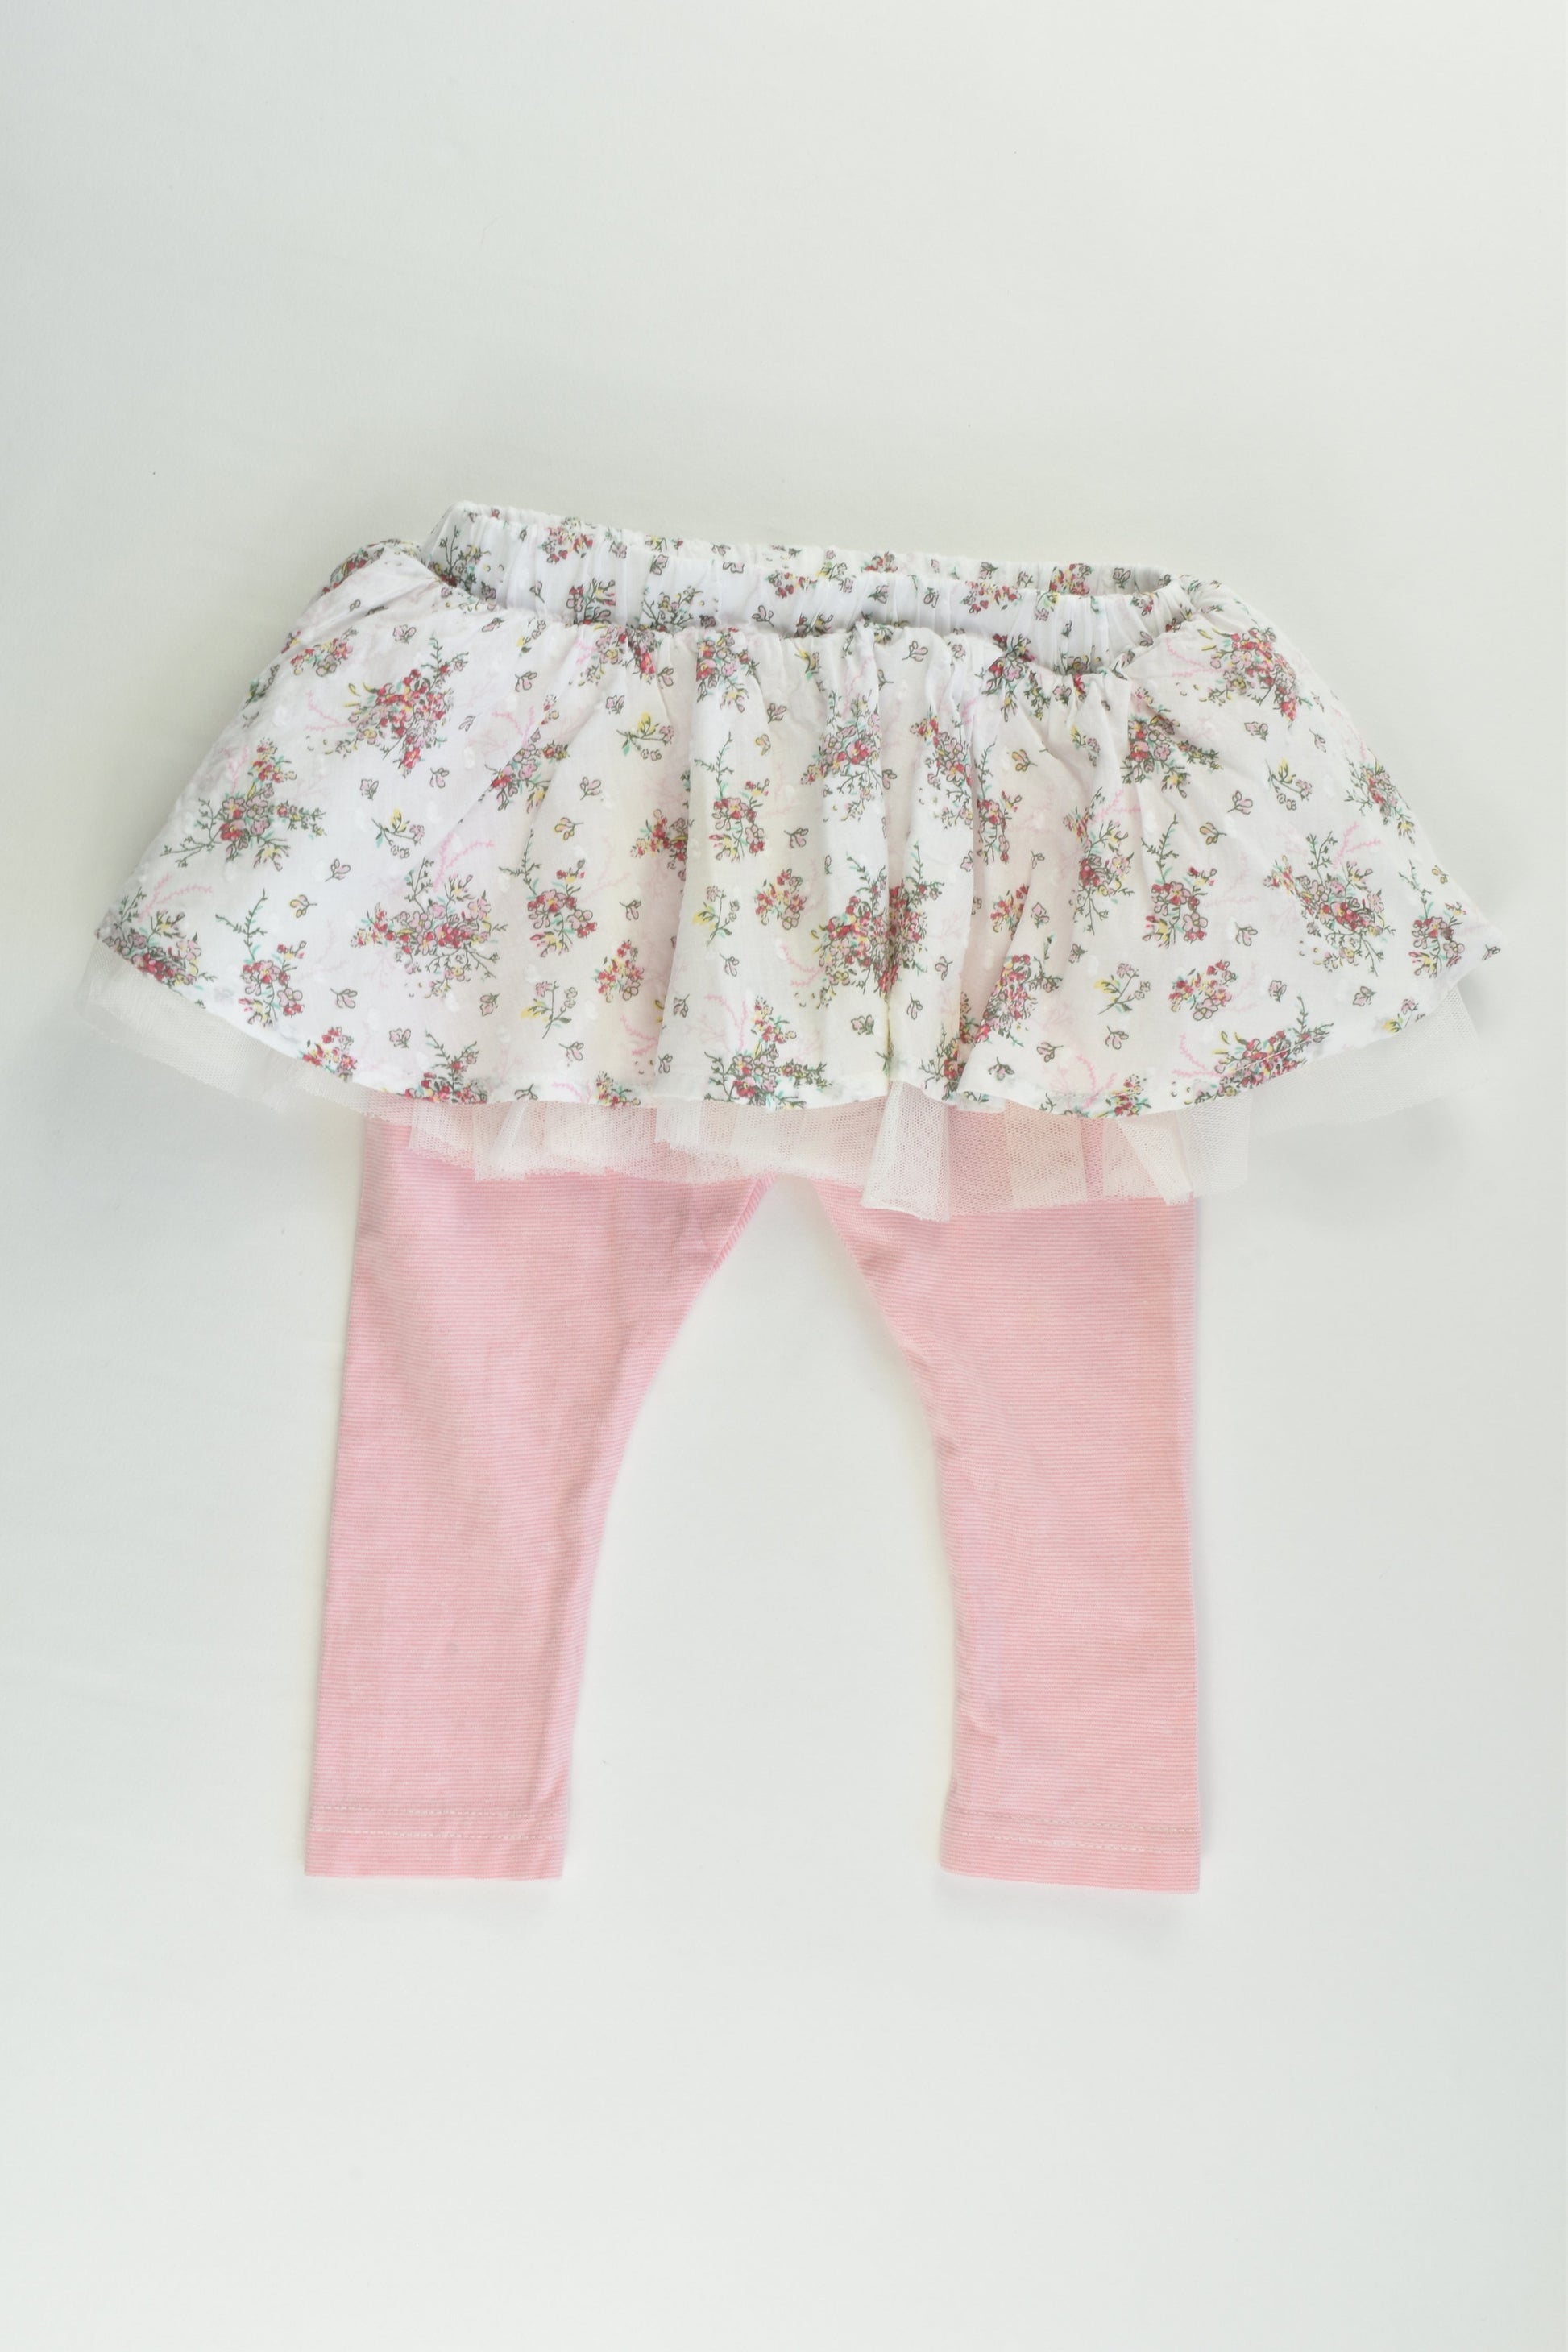 Bébé by Minihaha Size 0 (6-8 months) Outfit